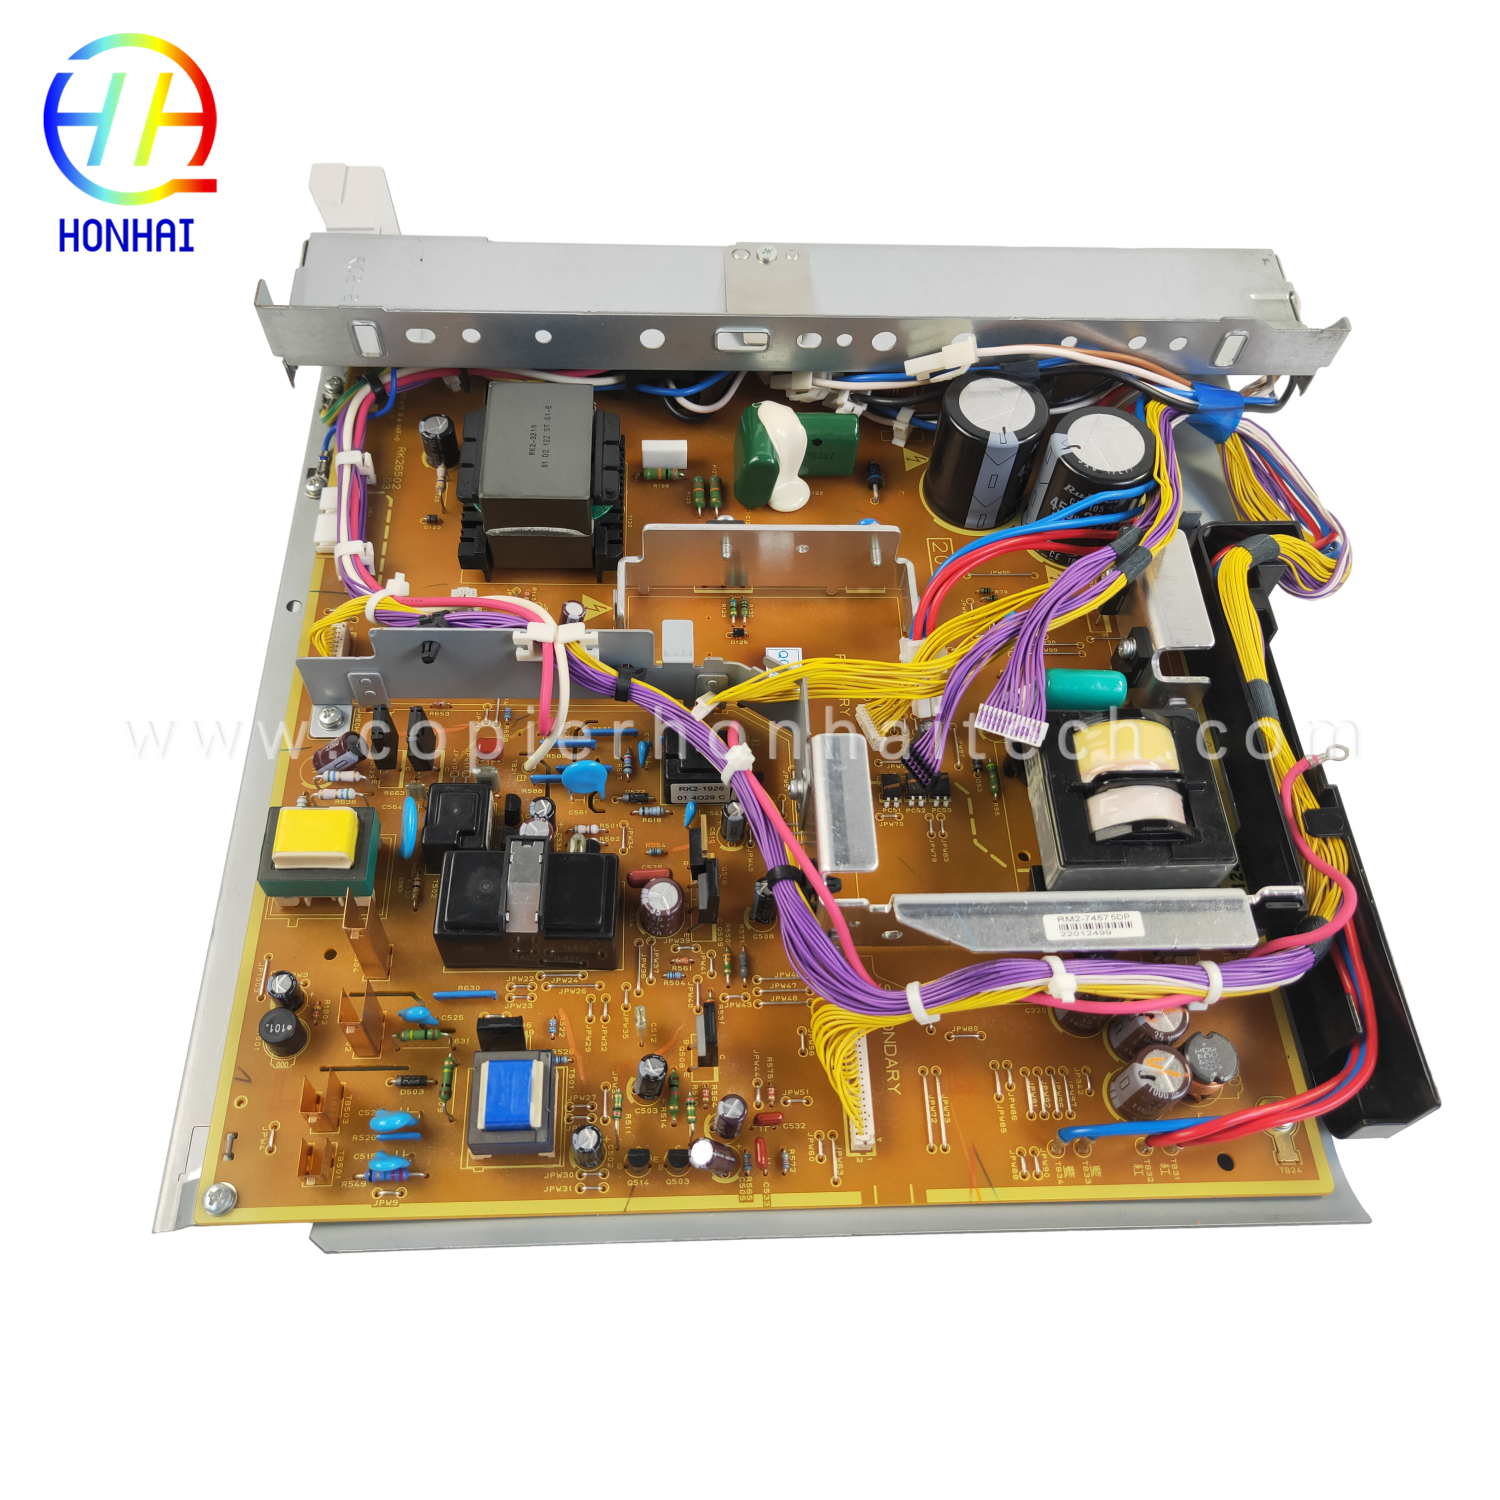 https://www.copierhonhaitech.com/high-volt-power-supply-220v-for-hp-laserjet-m630-rm2-5827-000-product/